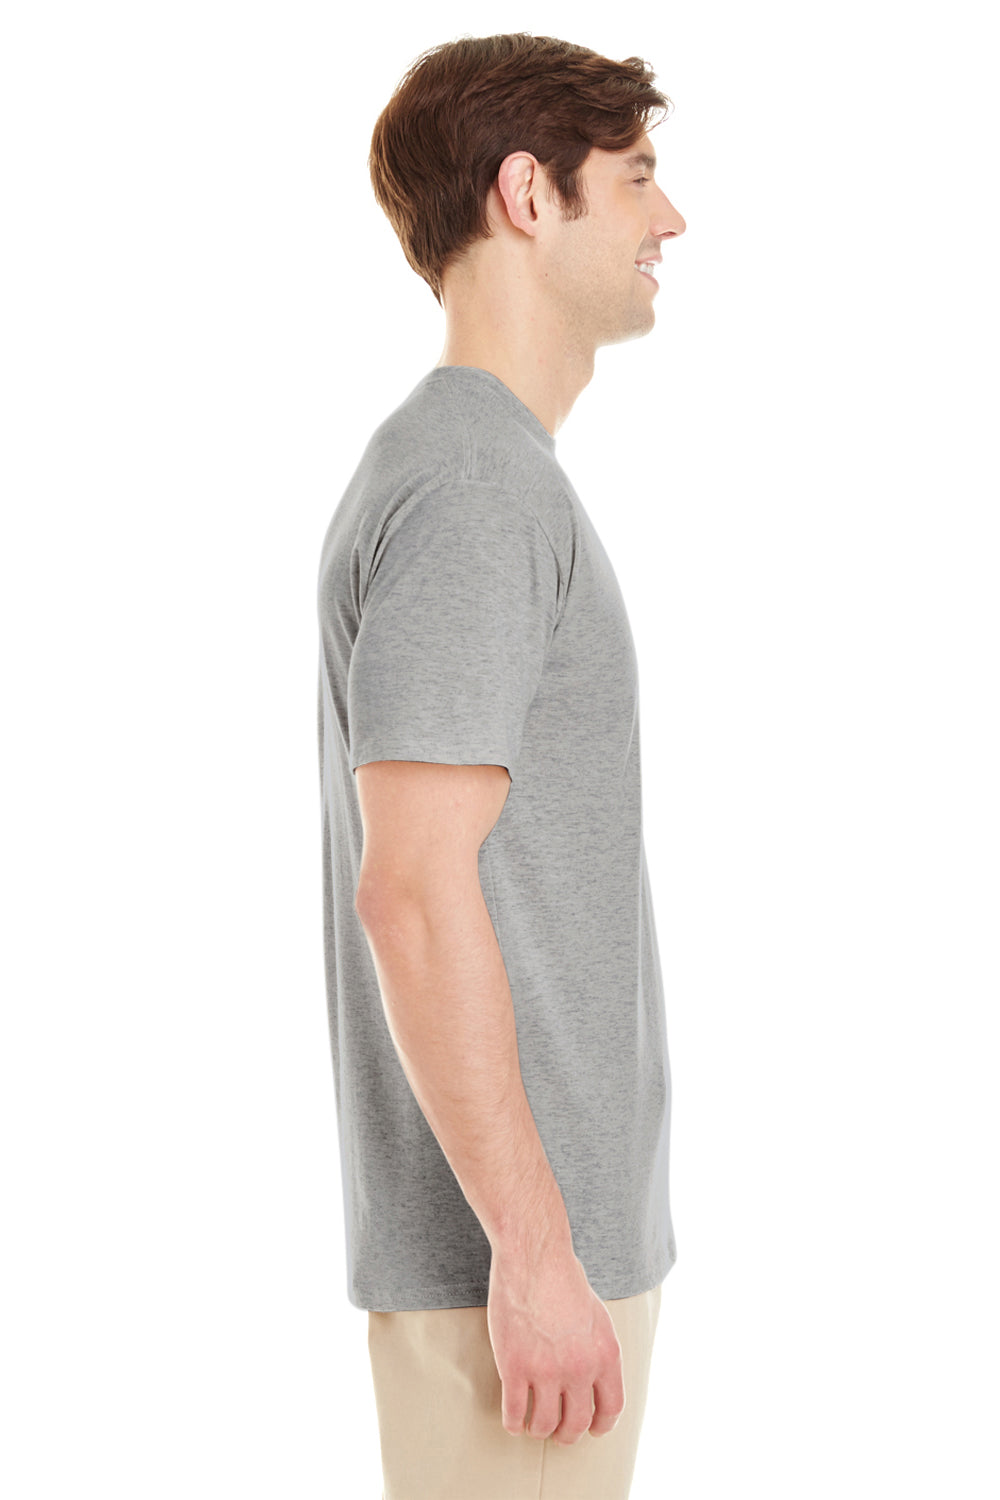 Jerzees 601MR Mens Short Sleeve Crewneck T-Shirt Oxford Grey Side